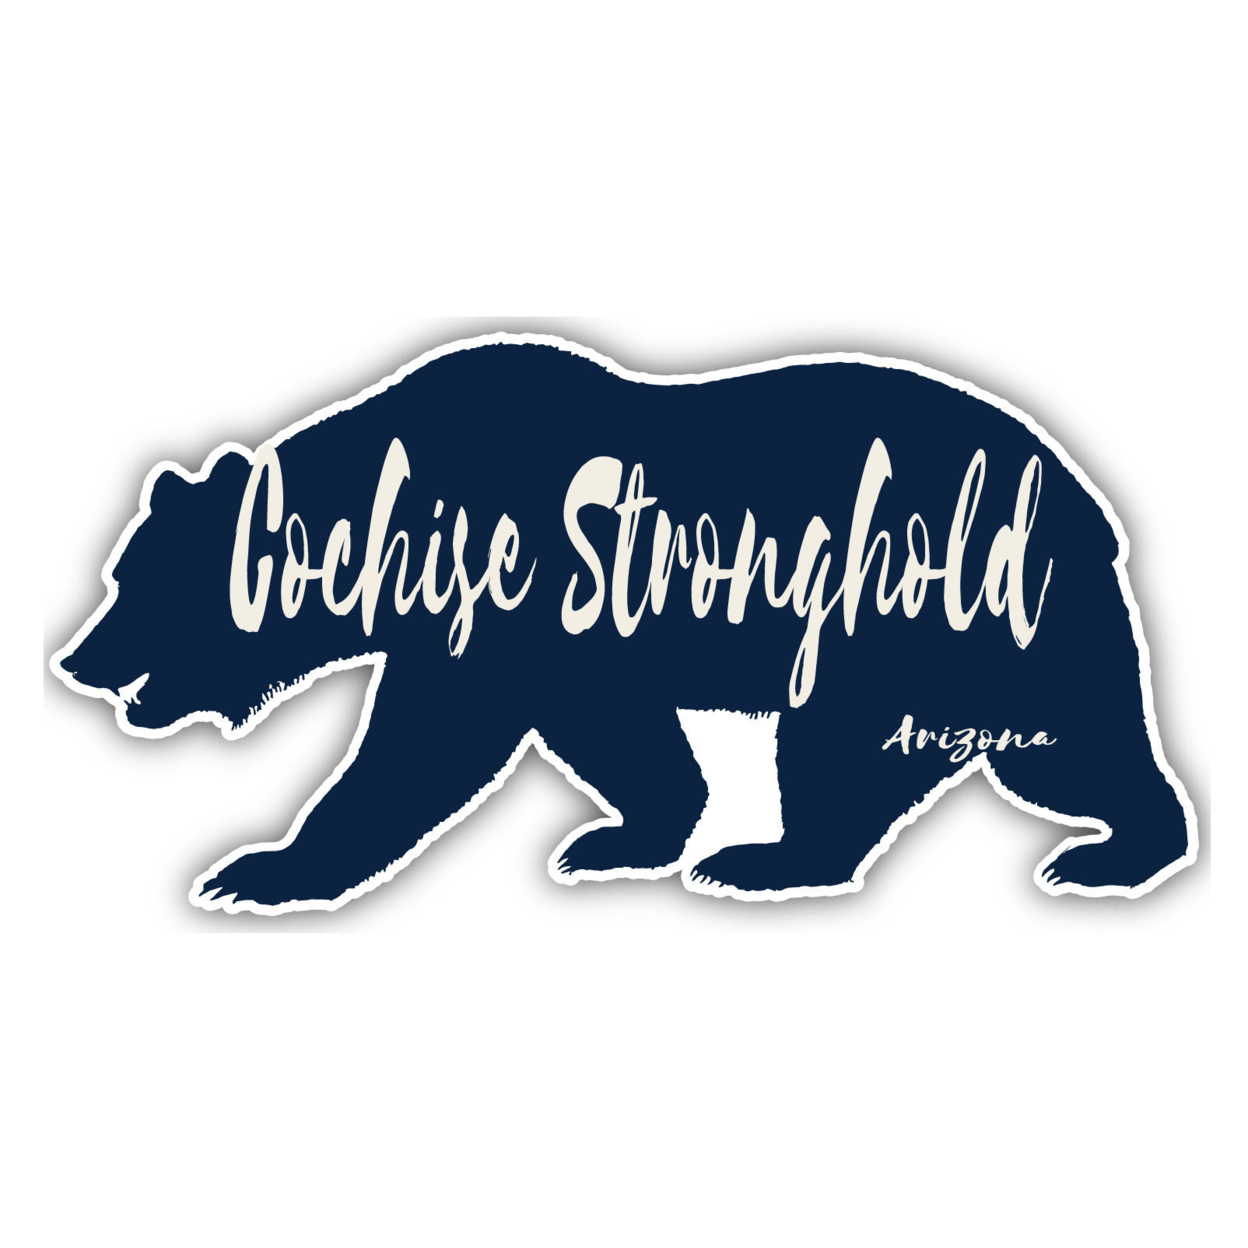 Cochise Stronghold Arizona Souvenir Decorative Stickers (Choose Theme And Size) - Single Unit, 12-Inch, Bear